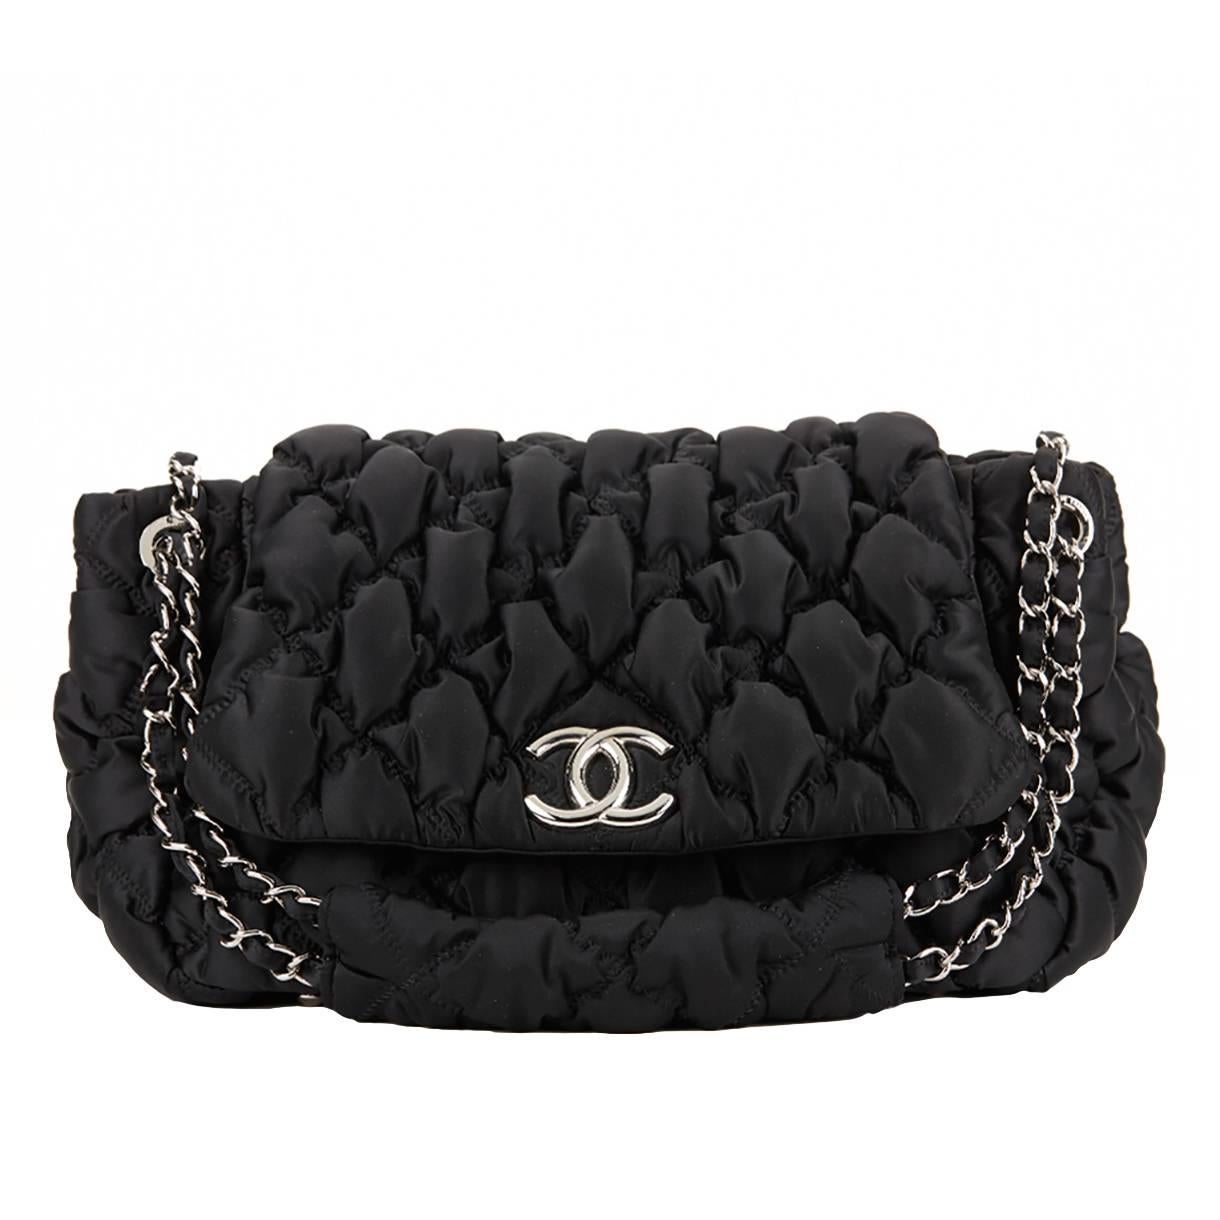 CHANEL, Bags, Chanel Surpique Bowler Bag